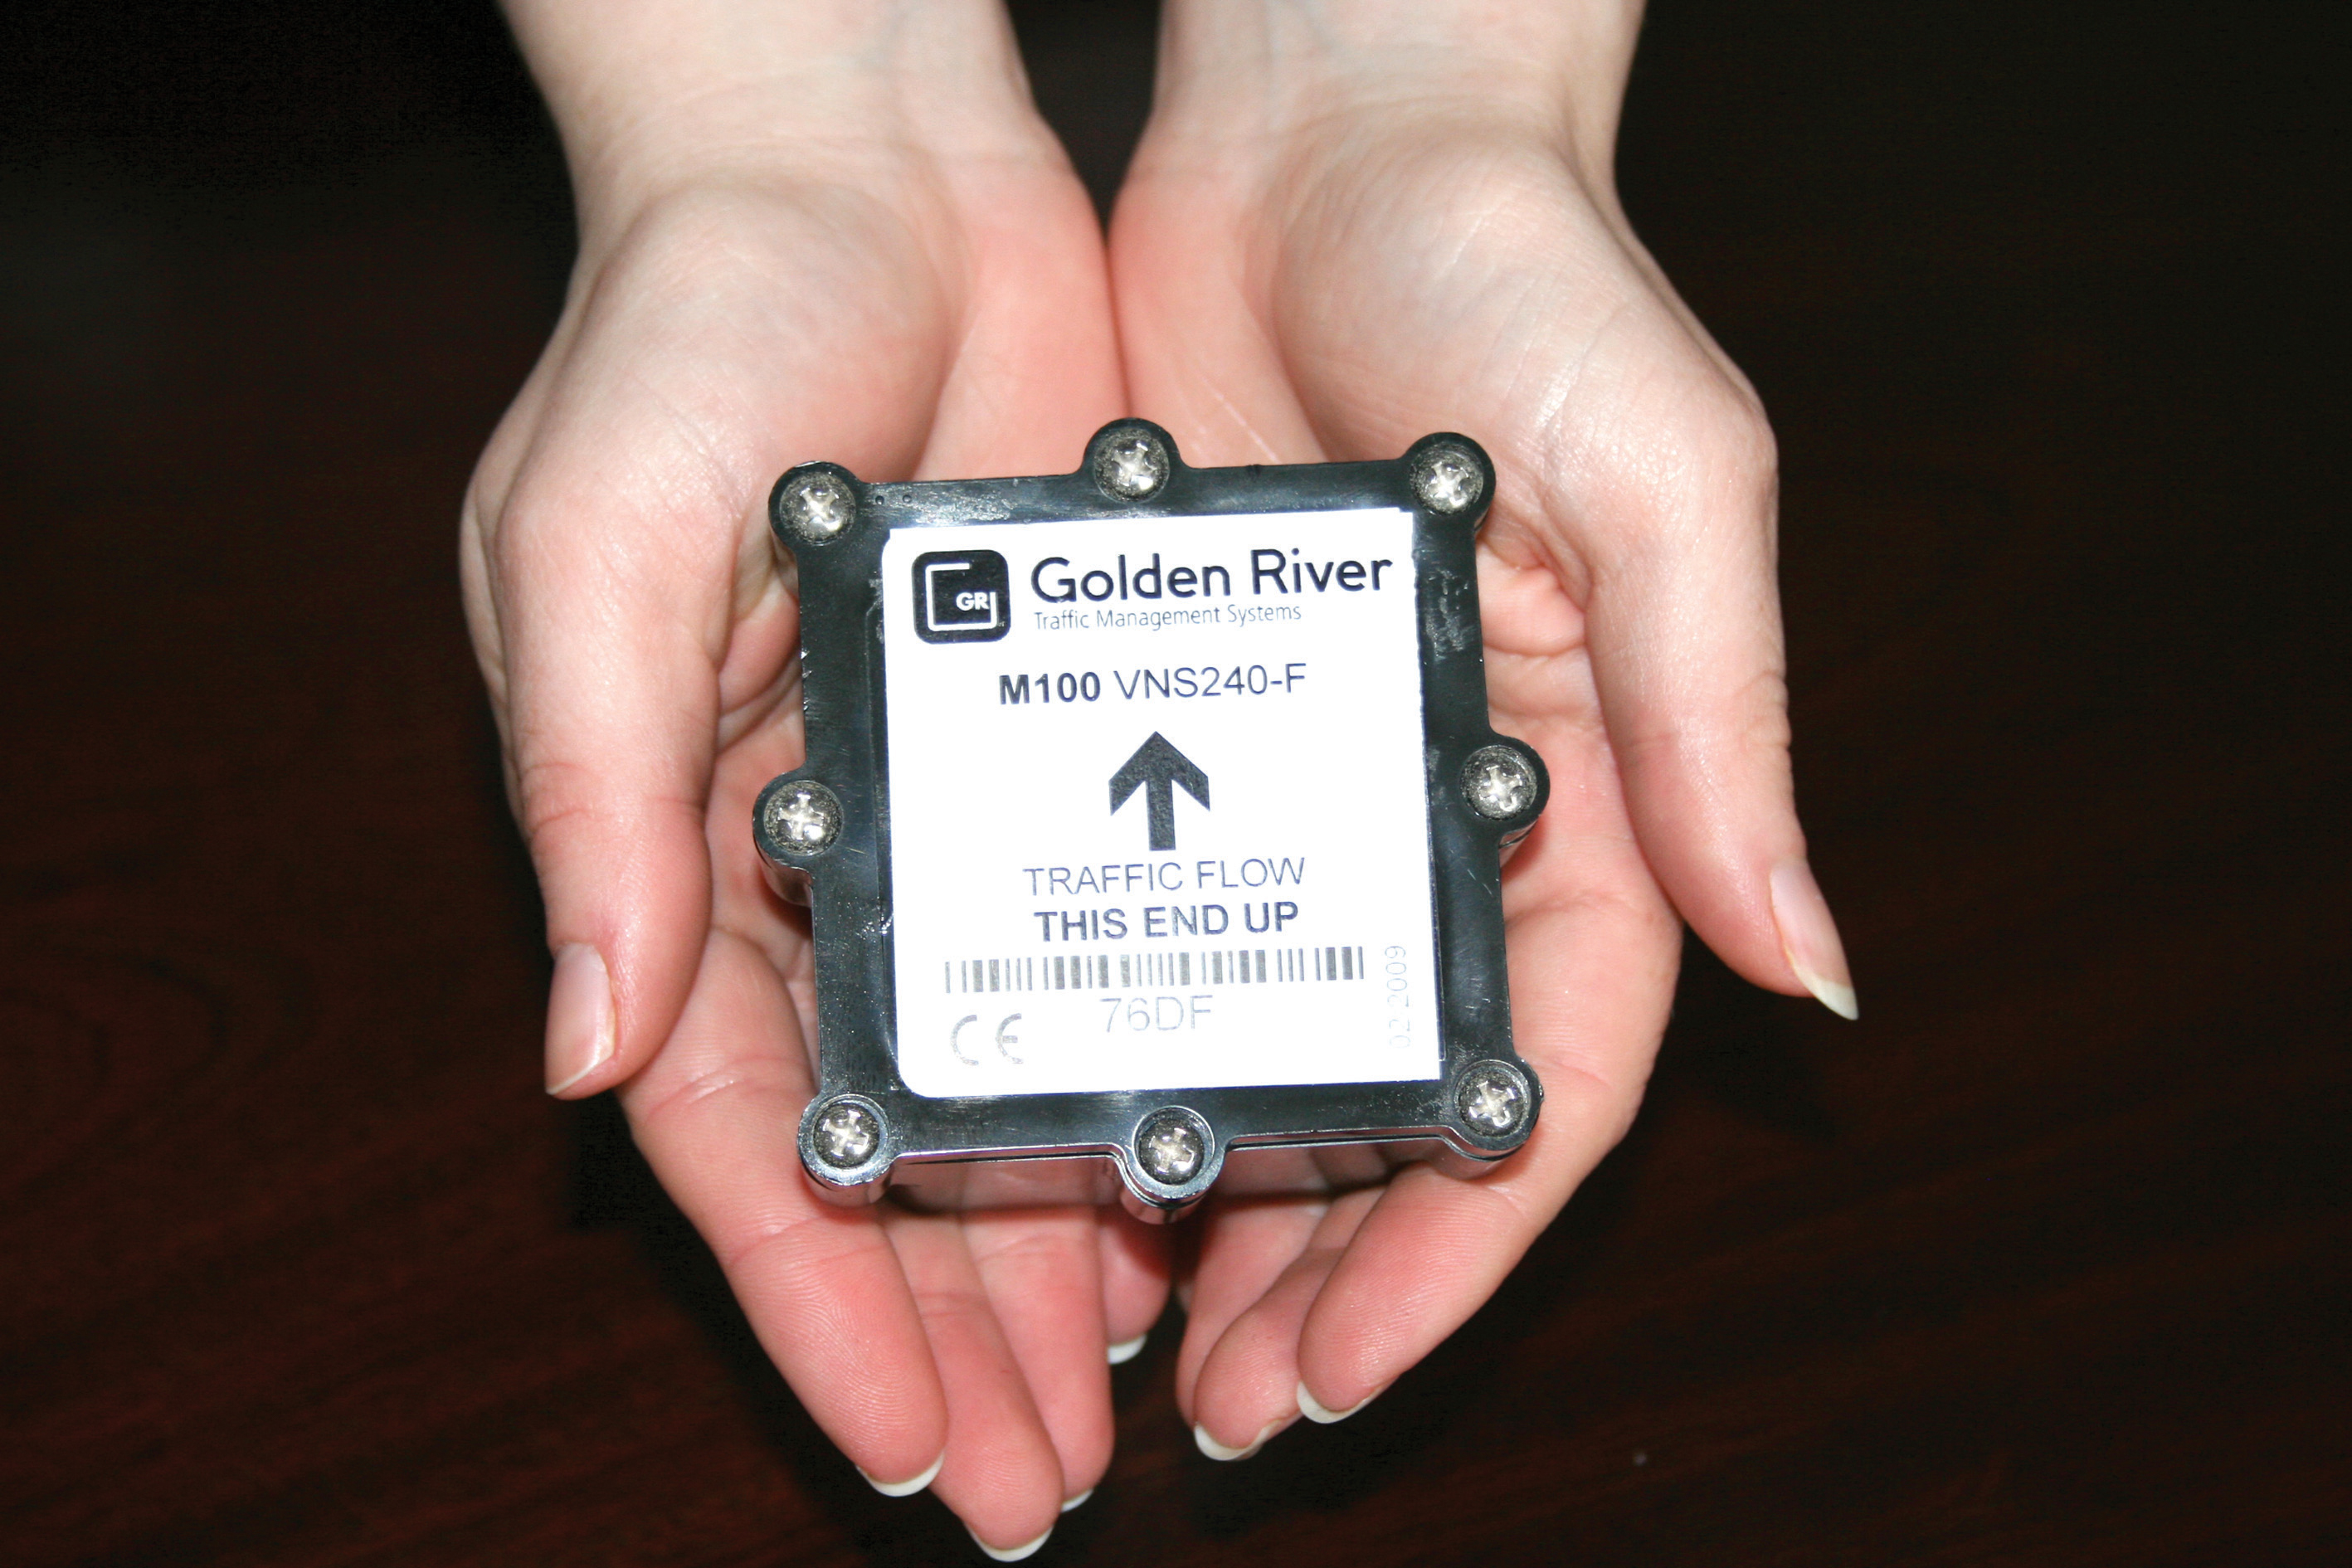 Golden River Vehicle Detection System